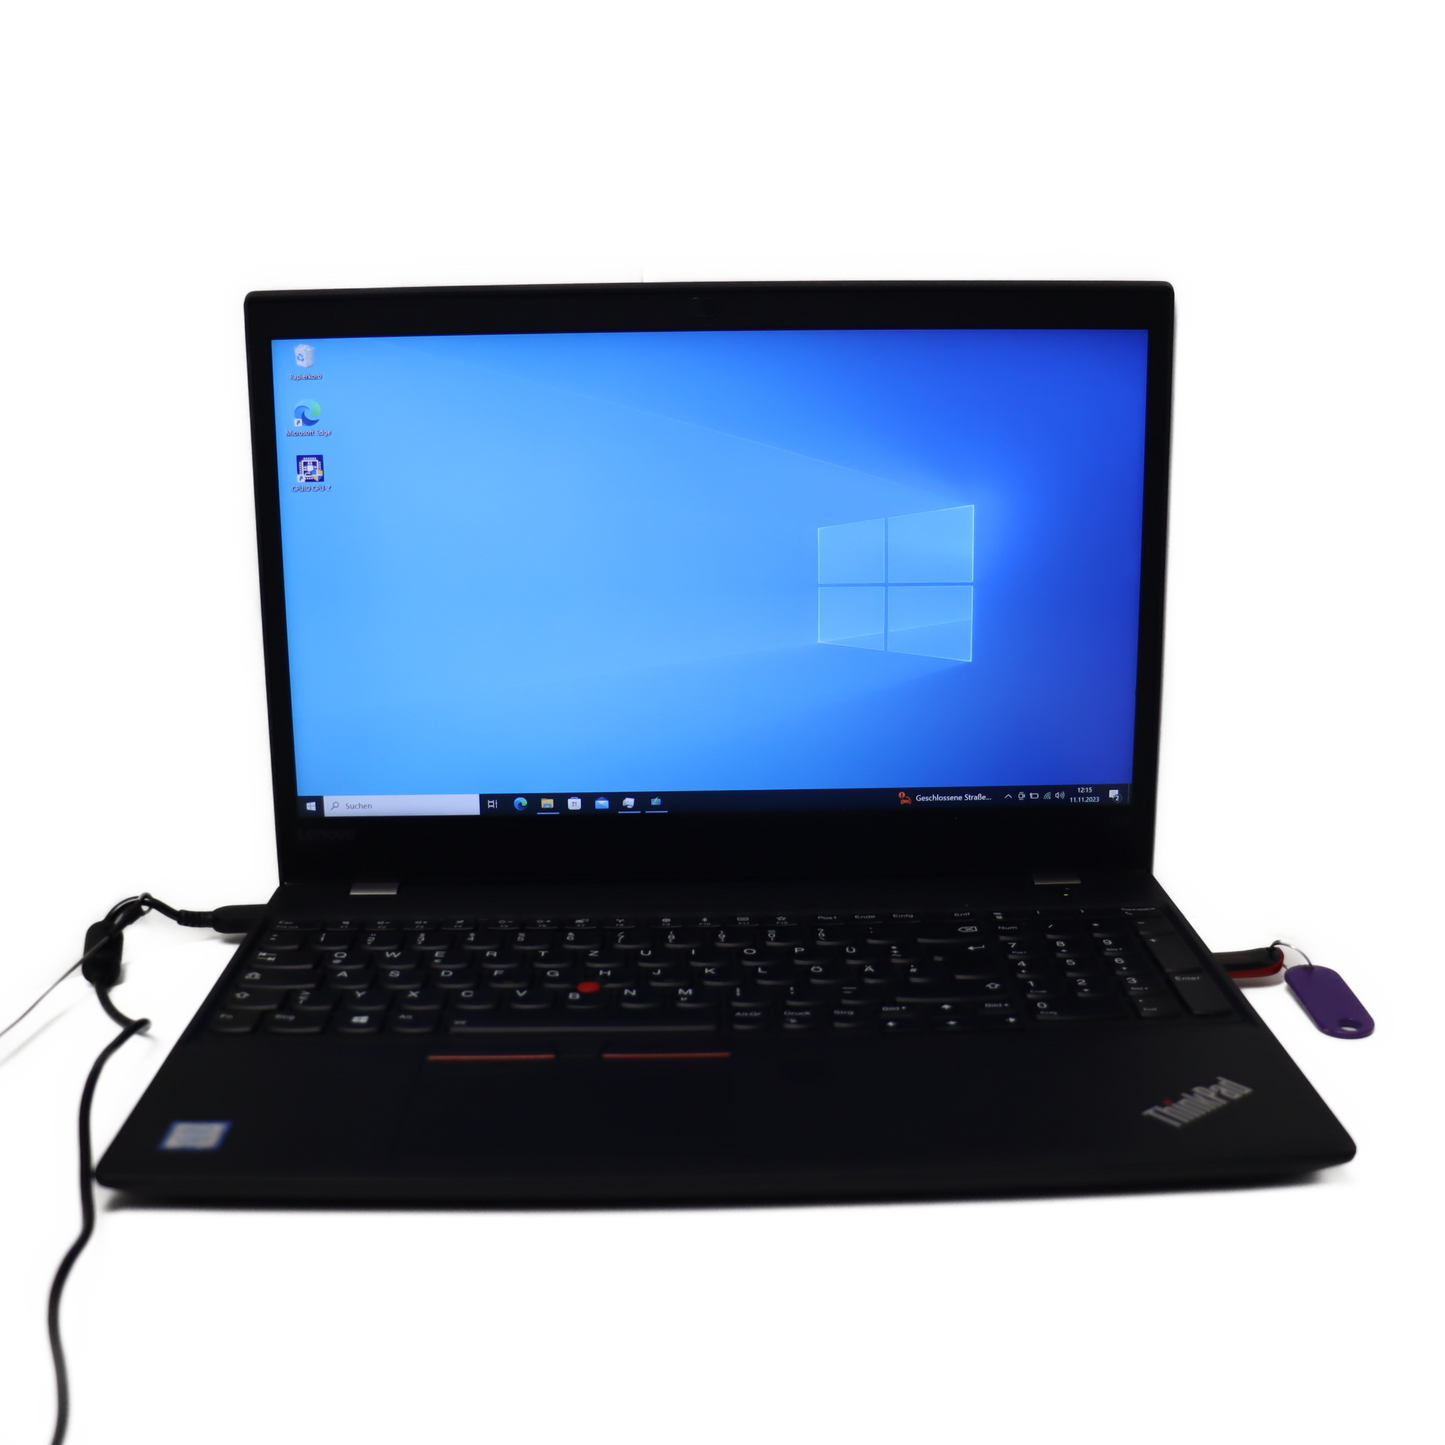 Lenovo ThinkPad T570 i5-7200U 8GB RAM 256GB SSD HD G620 W10 Pro R90P8LBX 1 Monat Gewär. SONDERPREIS